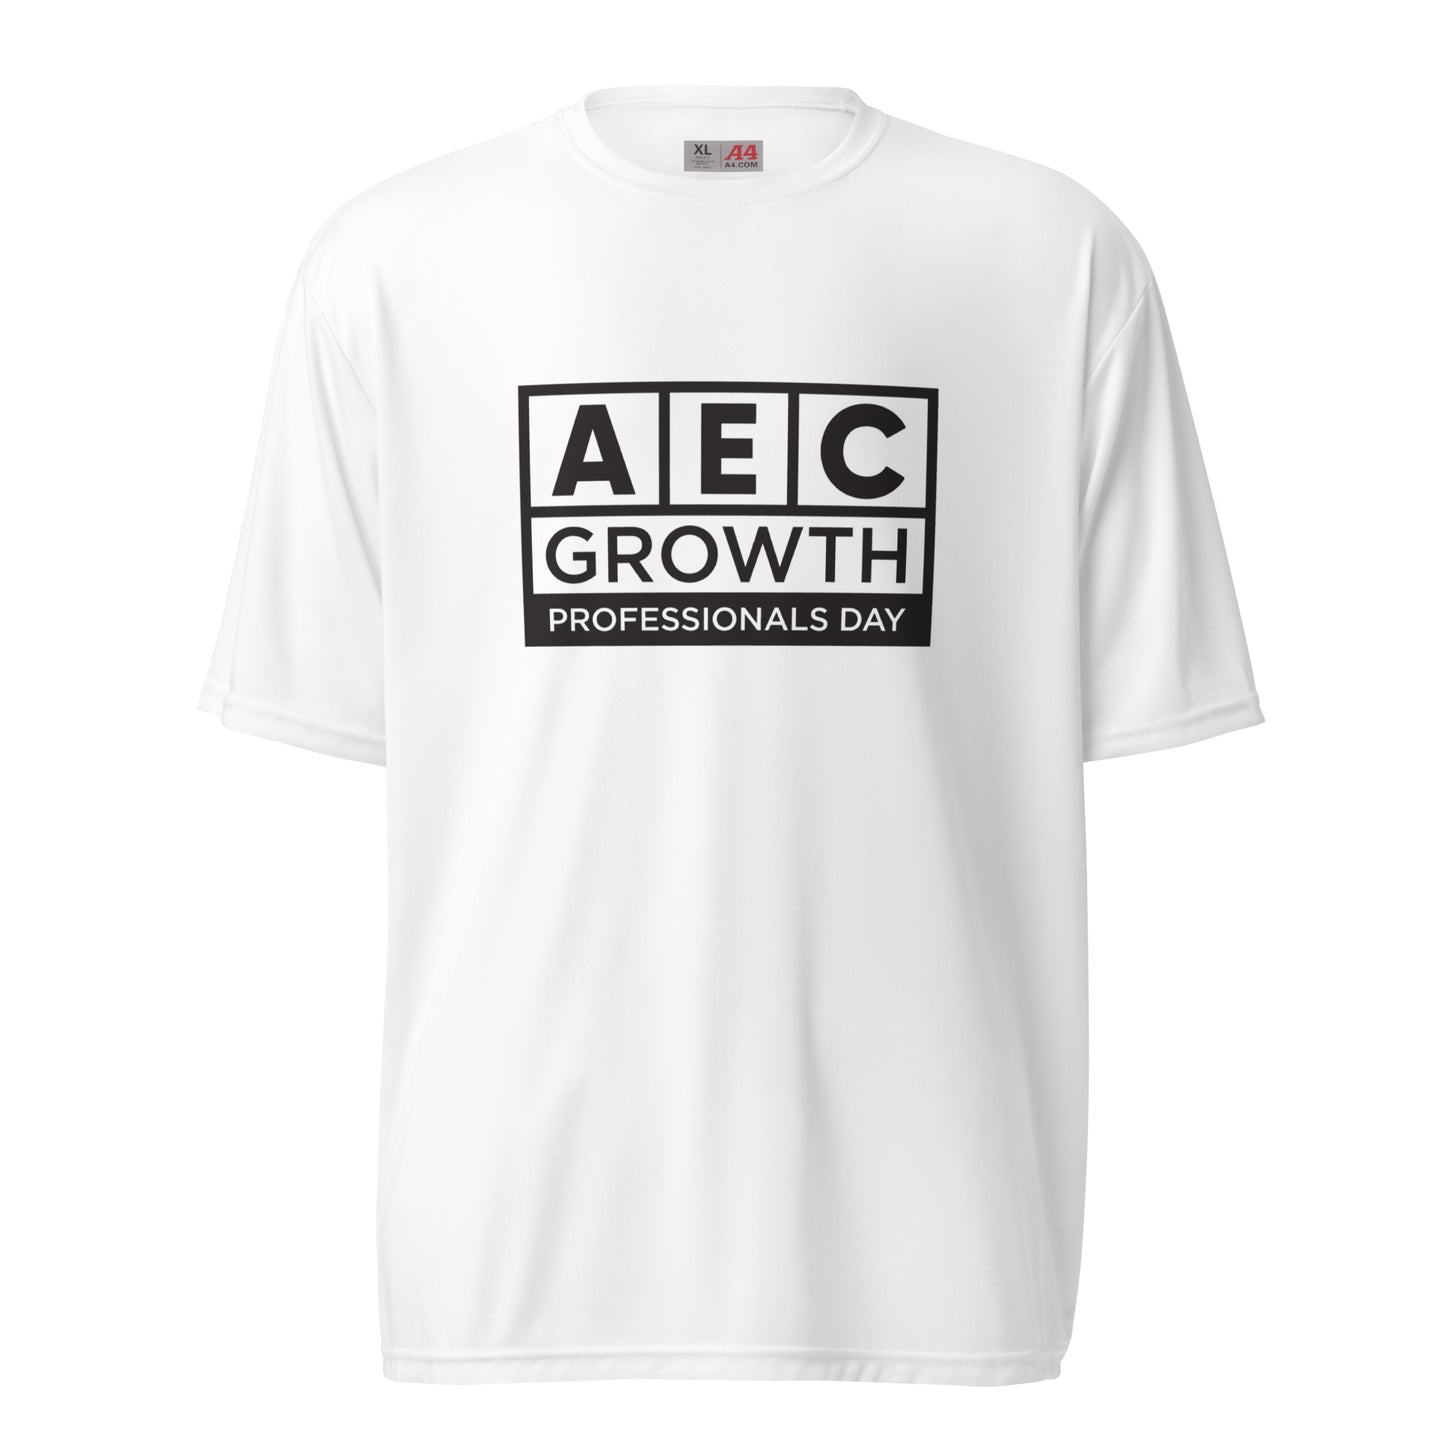 AEC Growth Professionals Day unisex t-shirt - Black